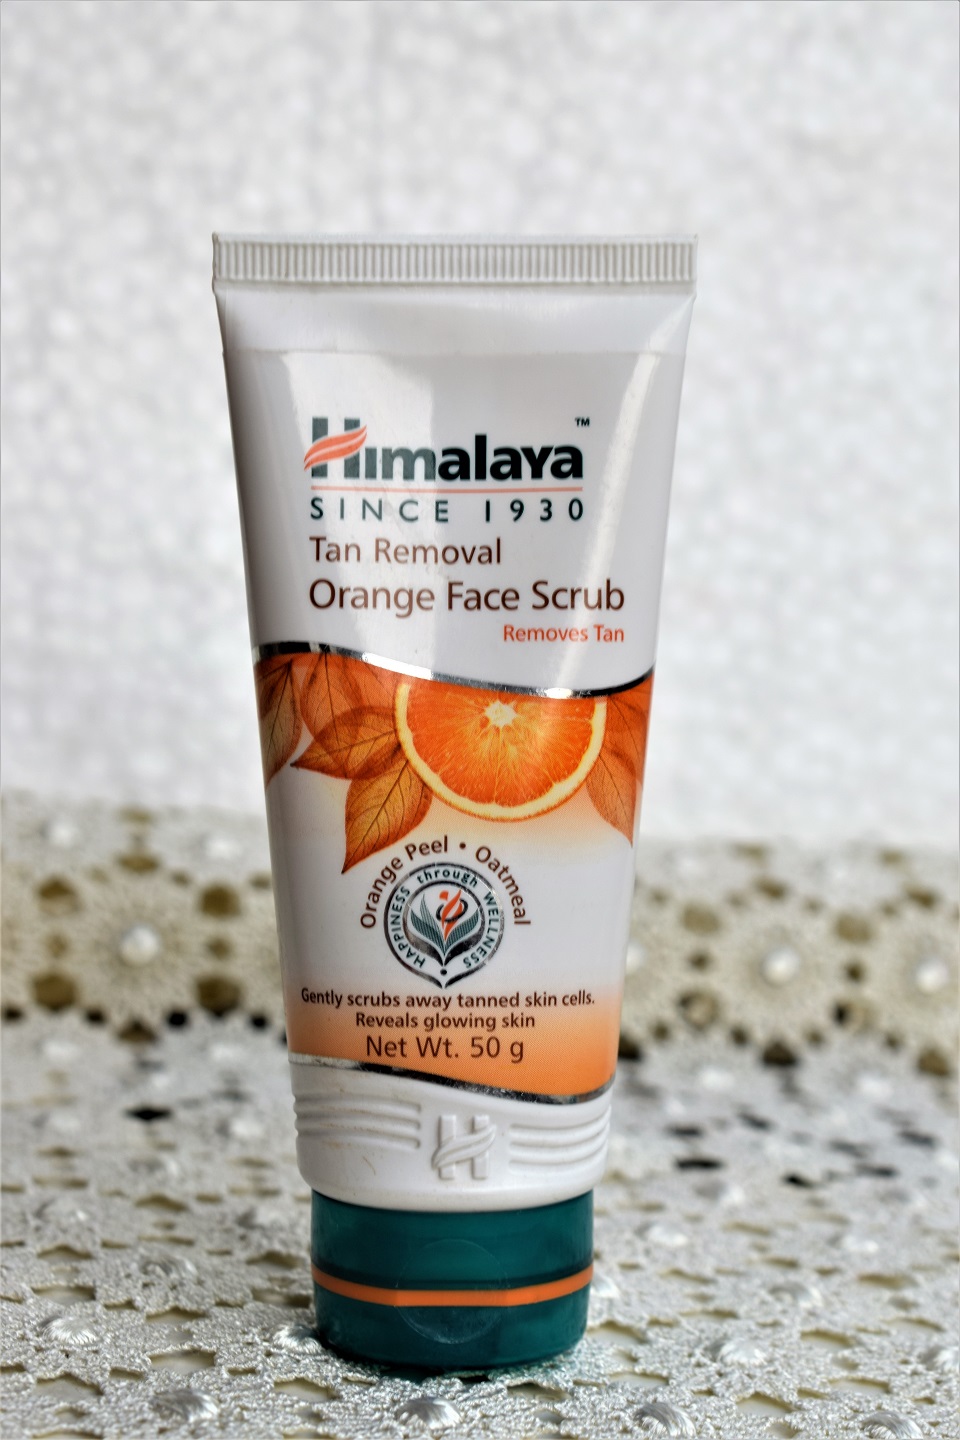 Himalaya Herbals Tan Removal Orange Scrub